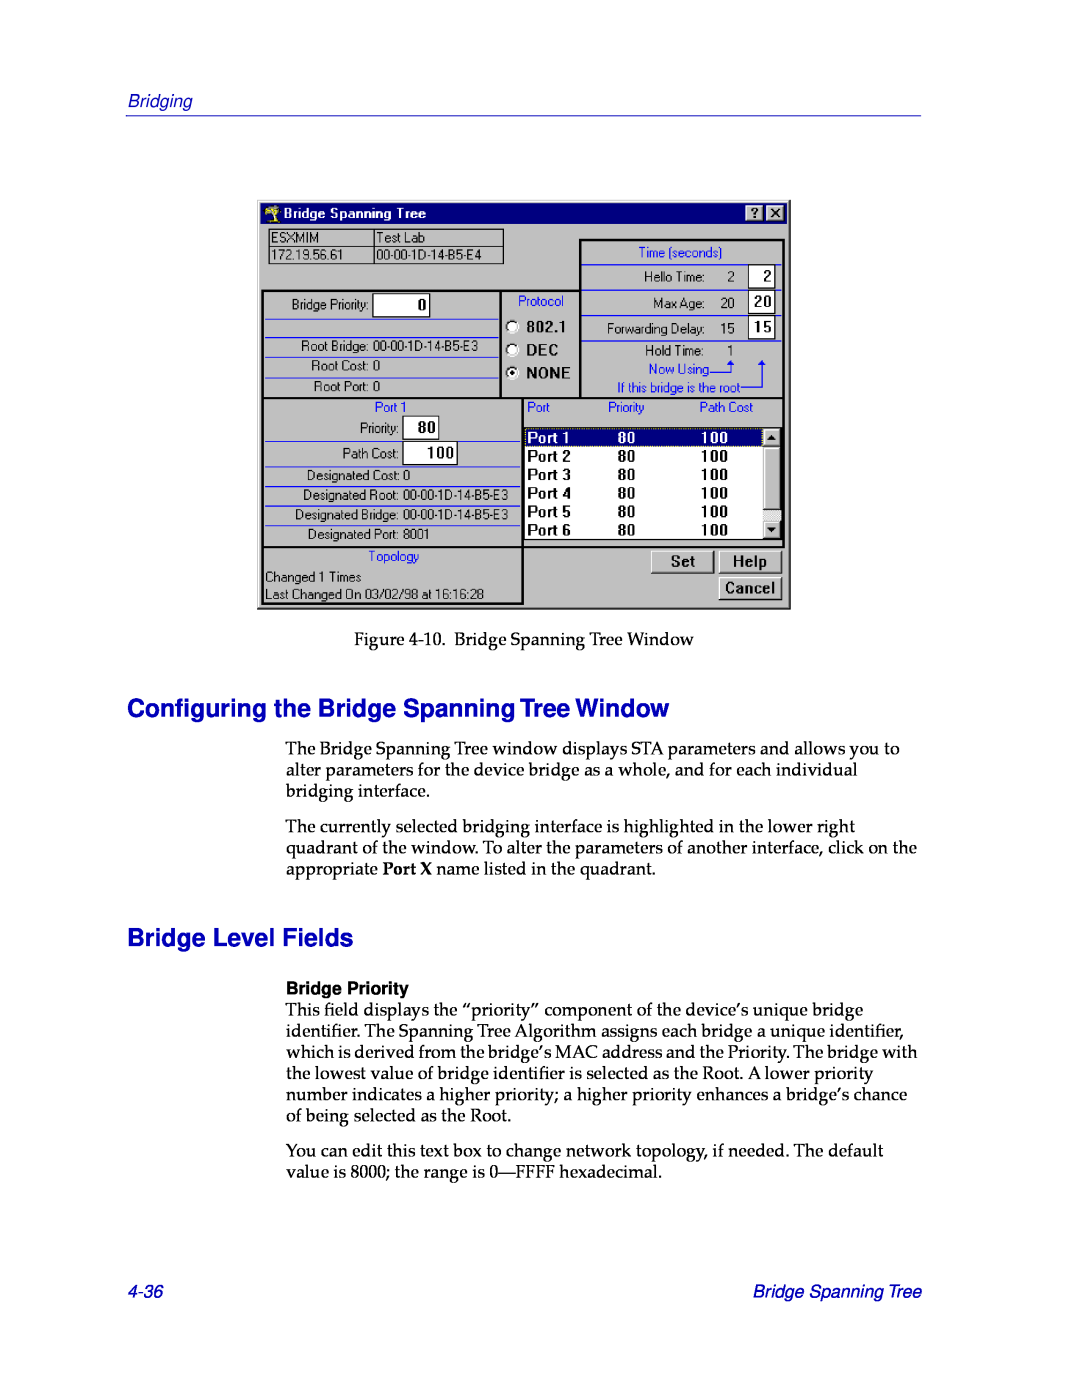 Cabletron Systems CSX400 Conﬁguring the Bridge Spanning Tree Window, Bridge Level Fields, Bridge Priority, 4-36, Bridging 